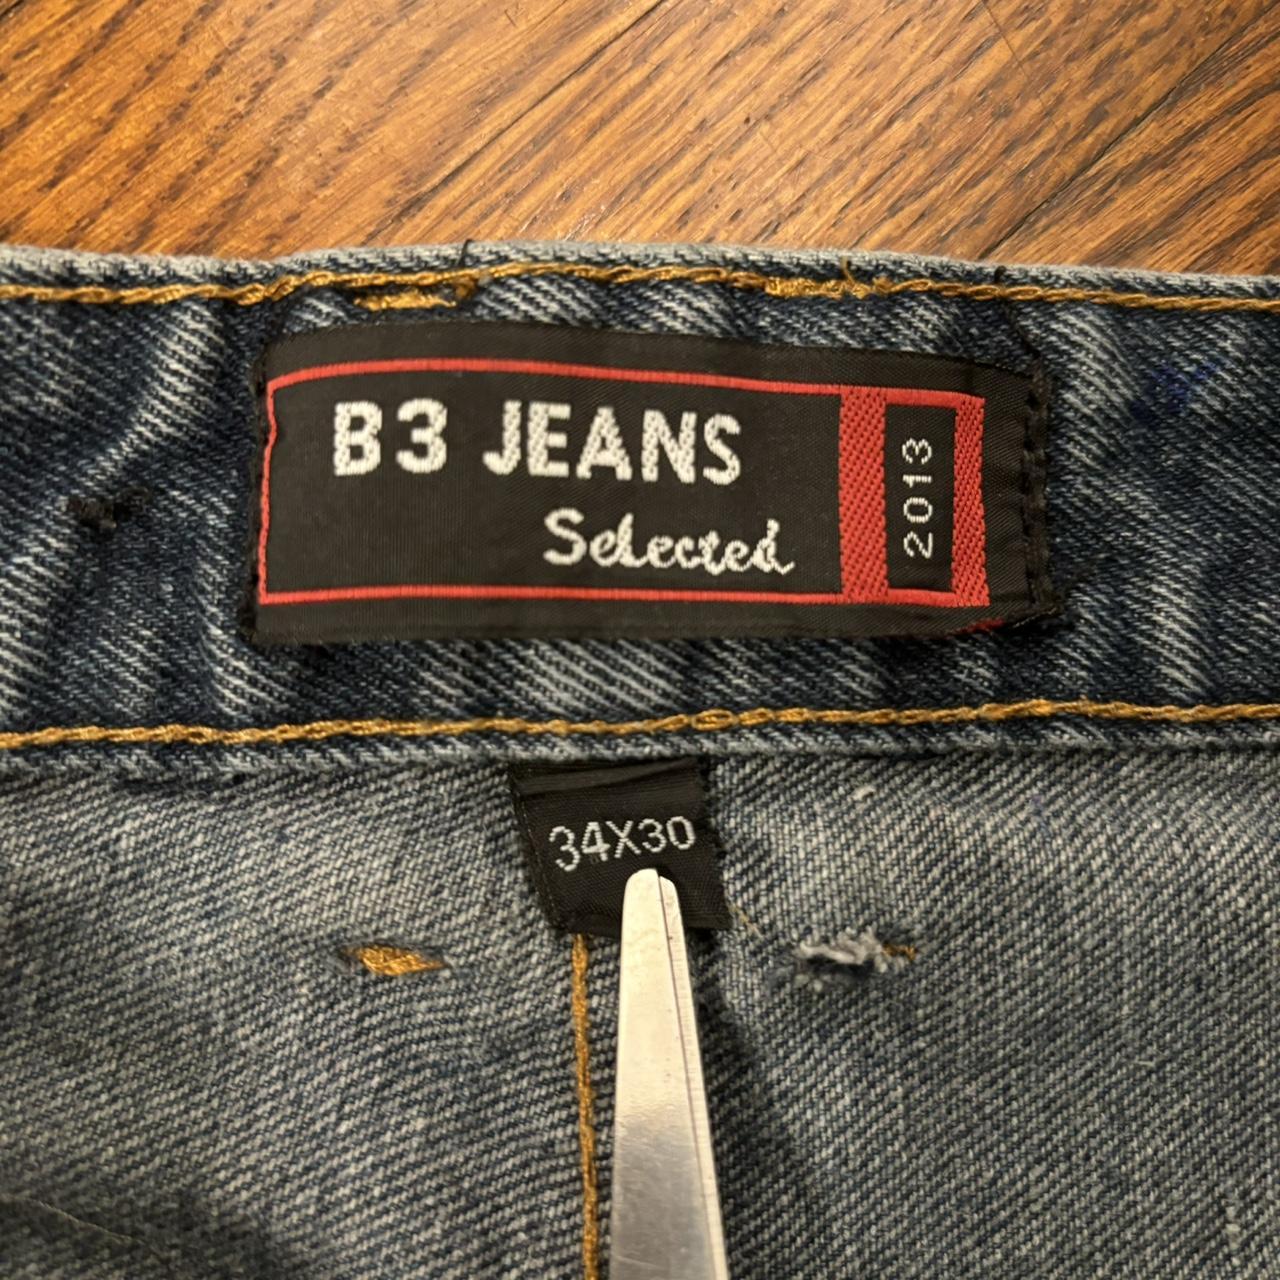 B3 jeans distressed loose fit / size 34 inseam 30... - Depop